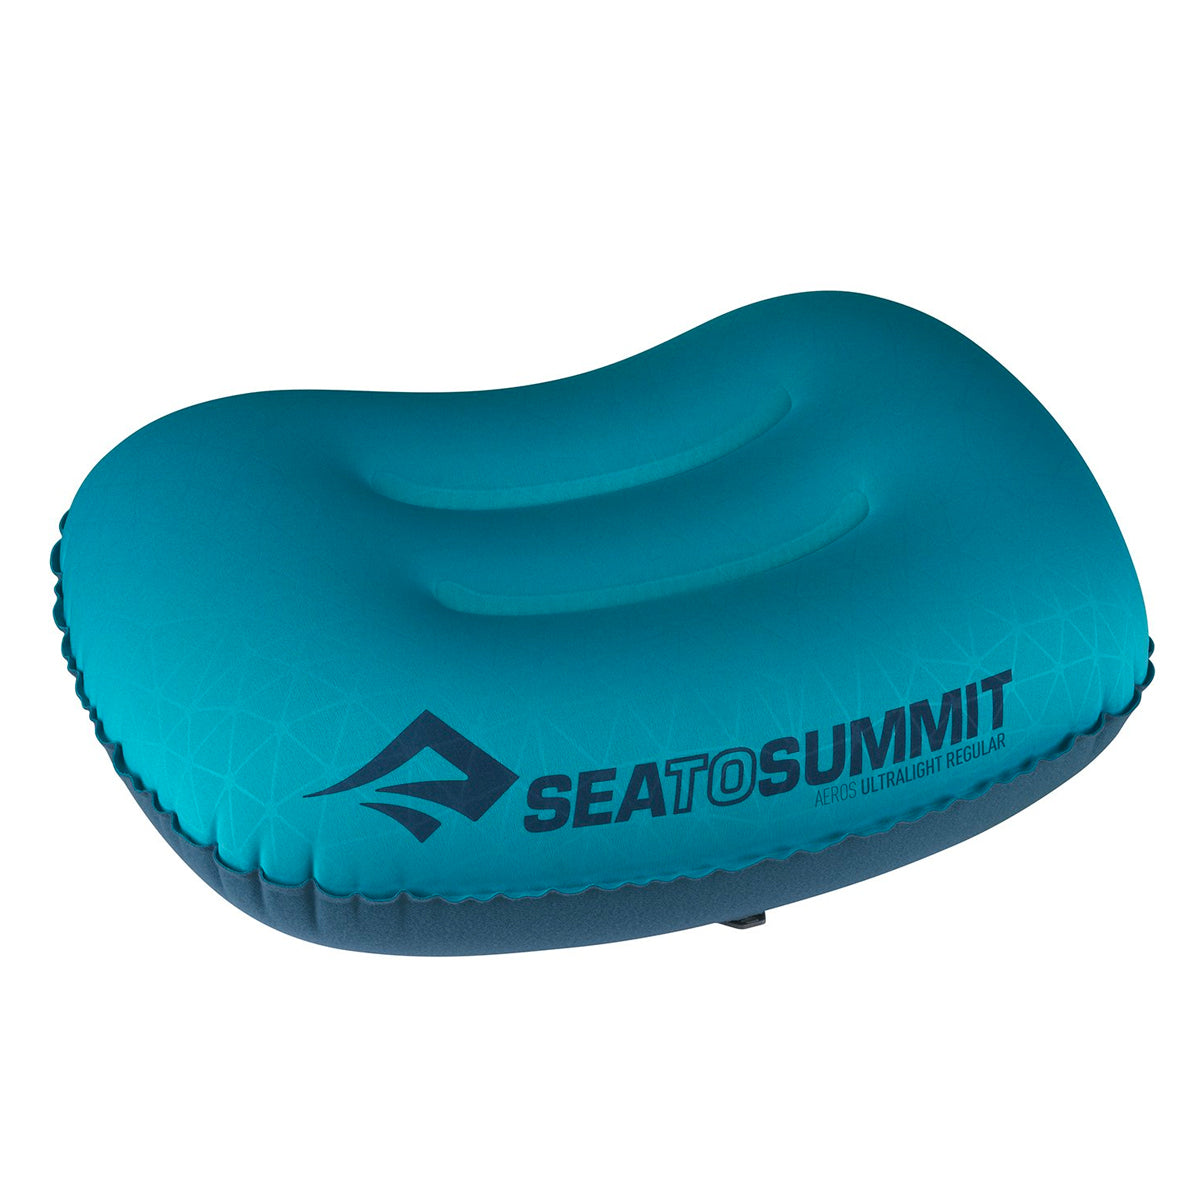 Sea to Summit Aeros Ultra Light Pillow in Sea to Summit Aeros Ultra Light Pillow - goHUNT Shop by GOHUNT | Sea to Summit - GOHUNT Shop